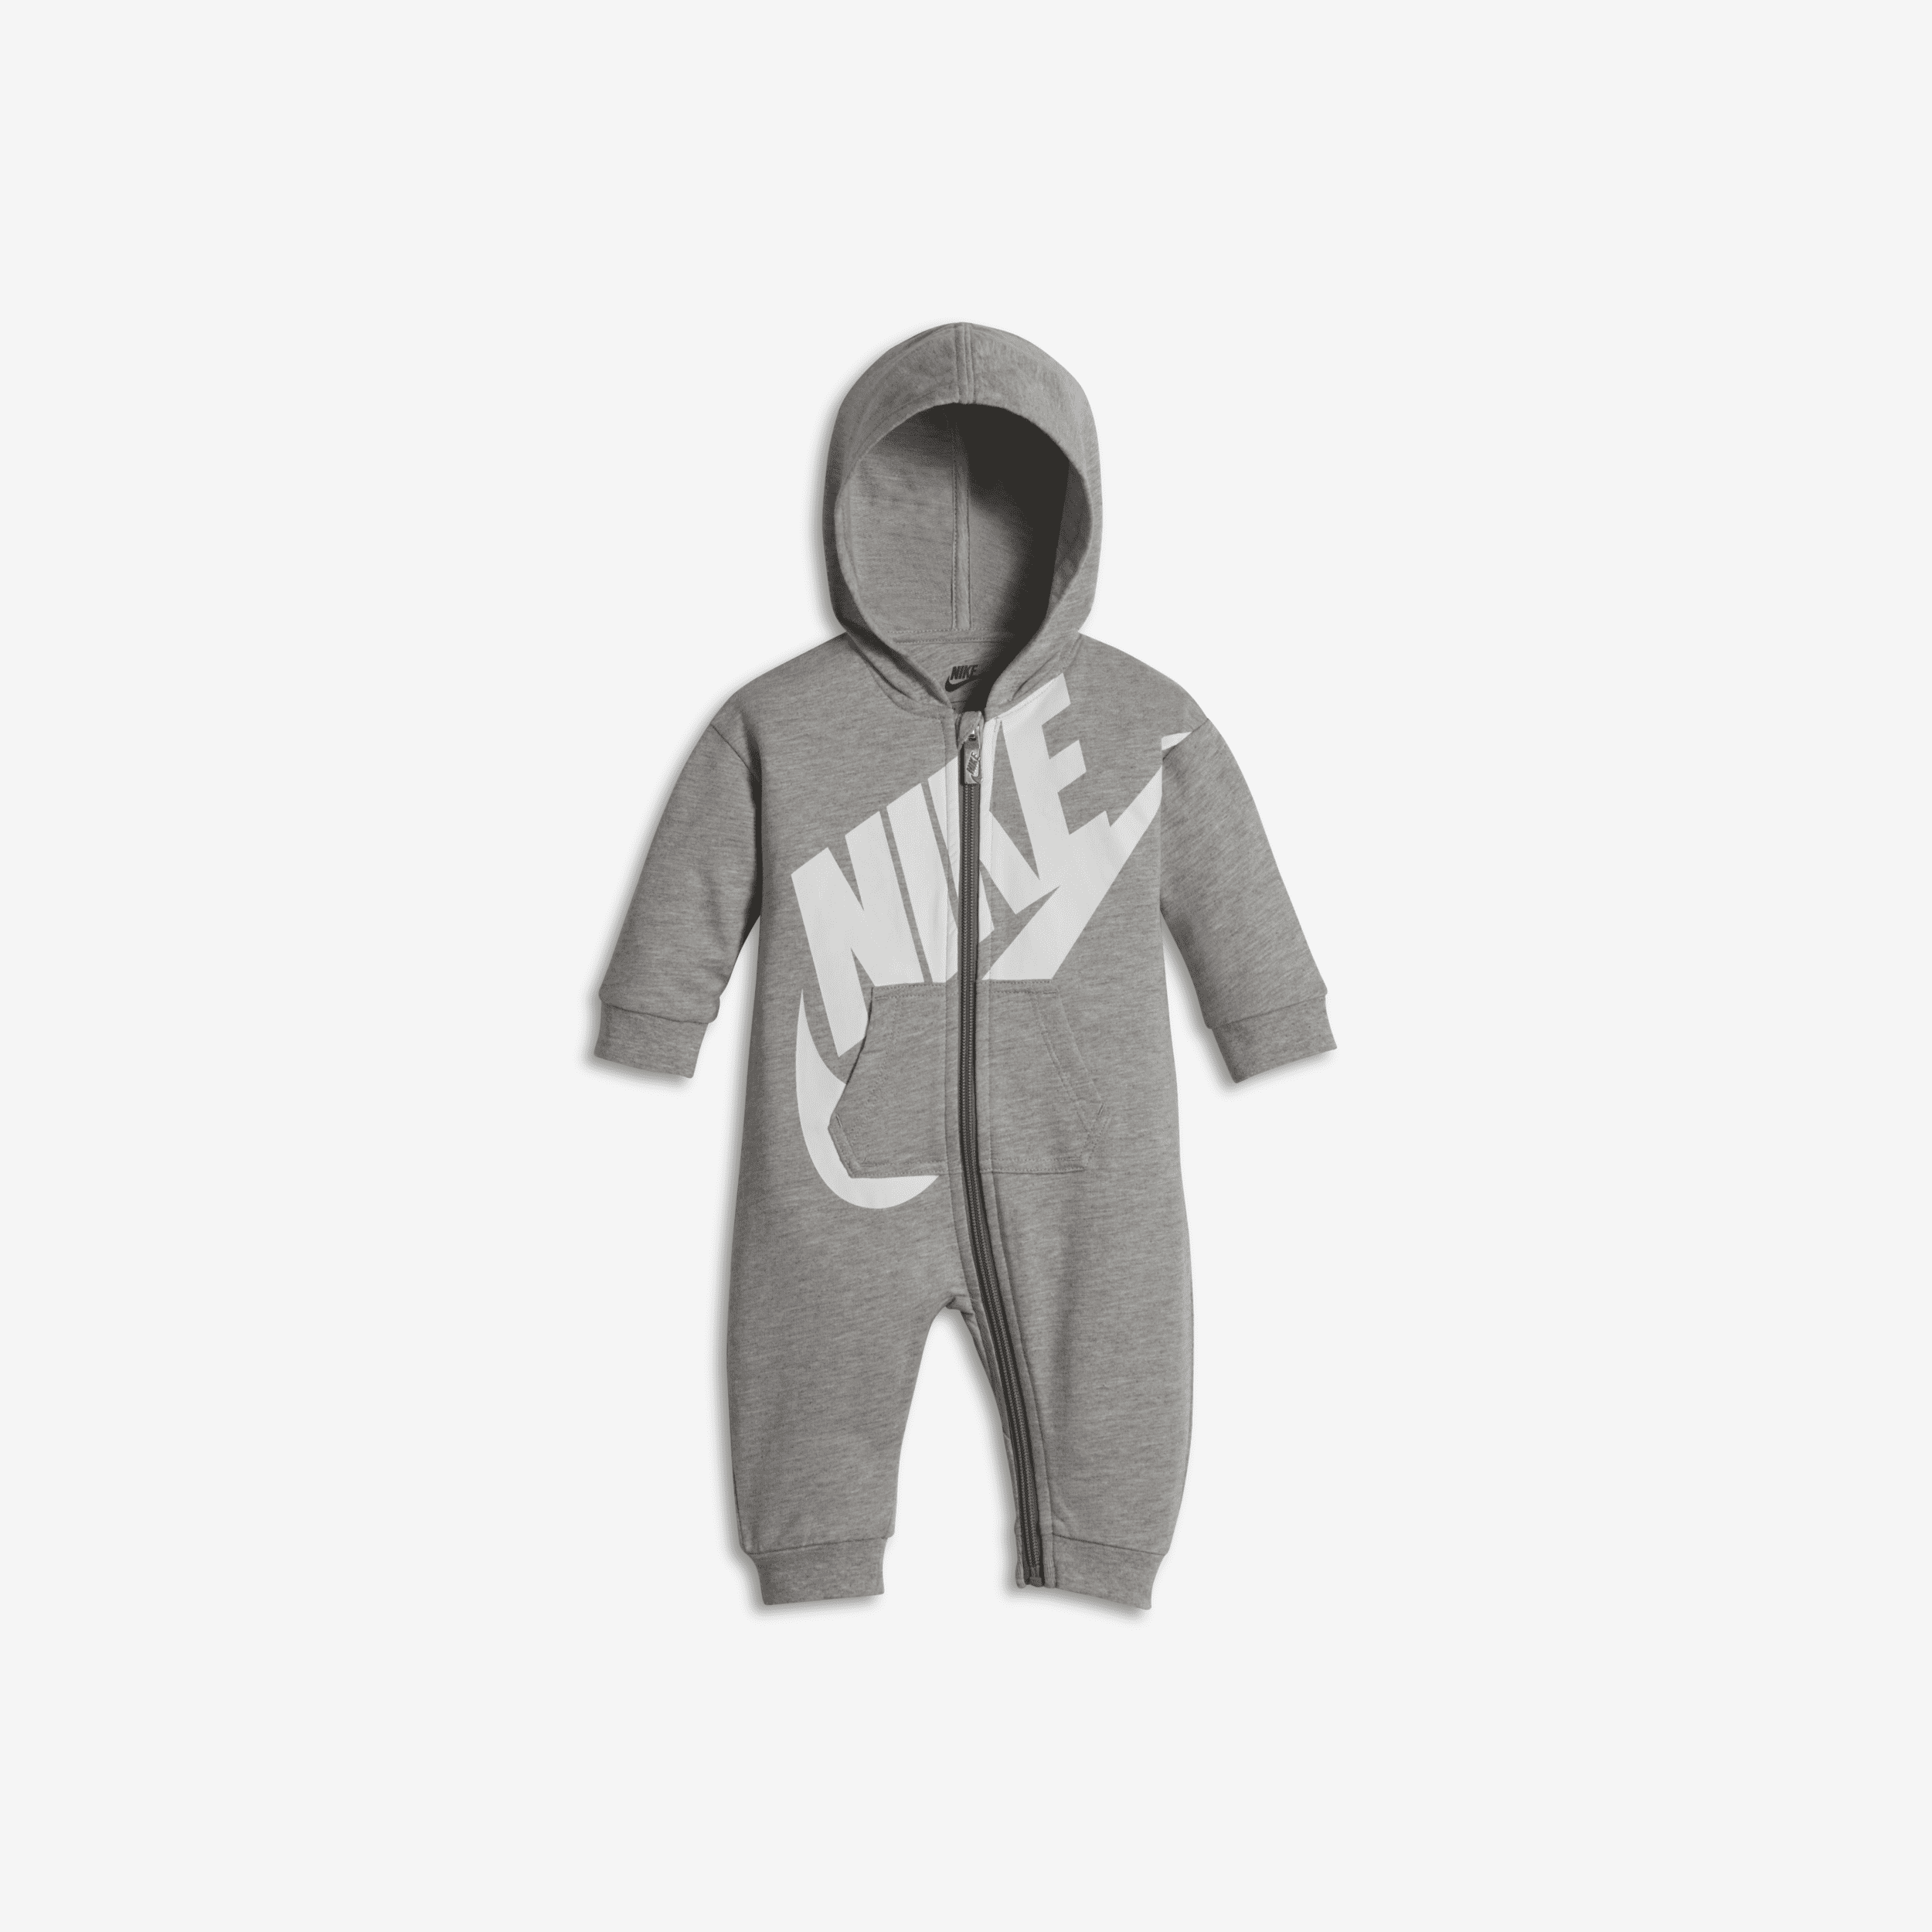 Nike Mono con cremallera completa - Bebé (0-12 M) - Gris